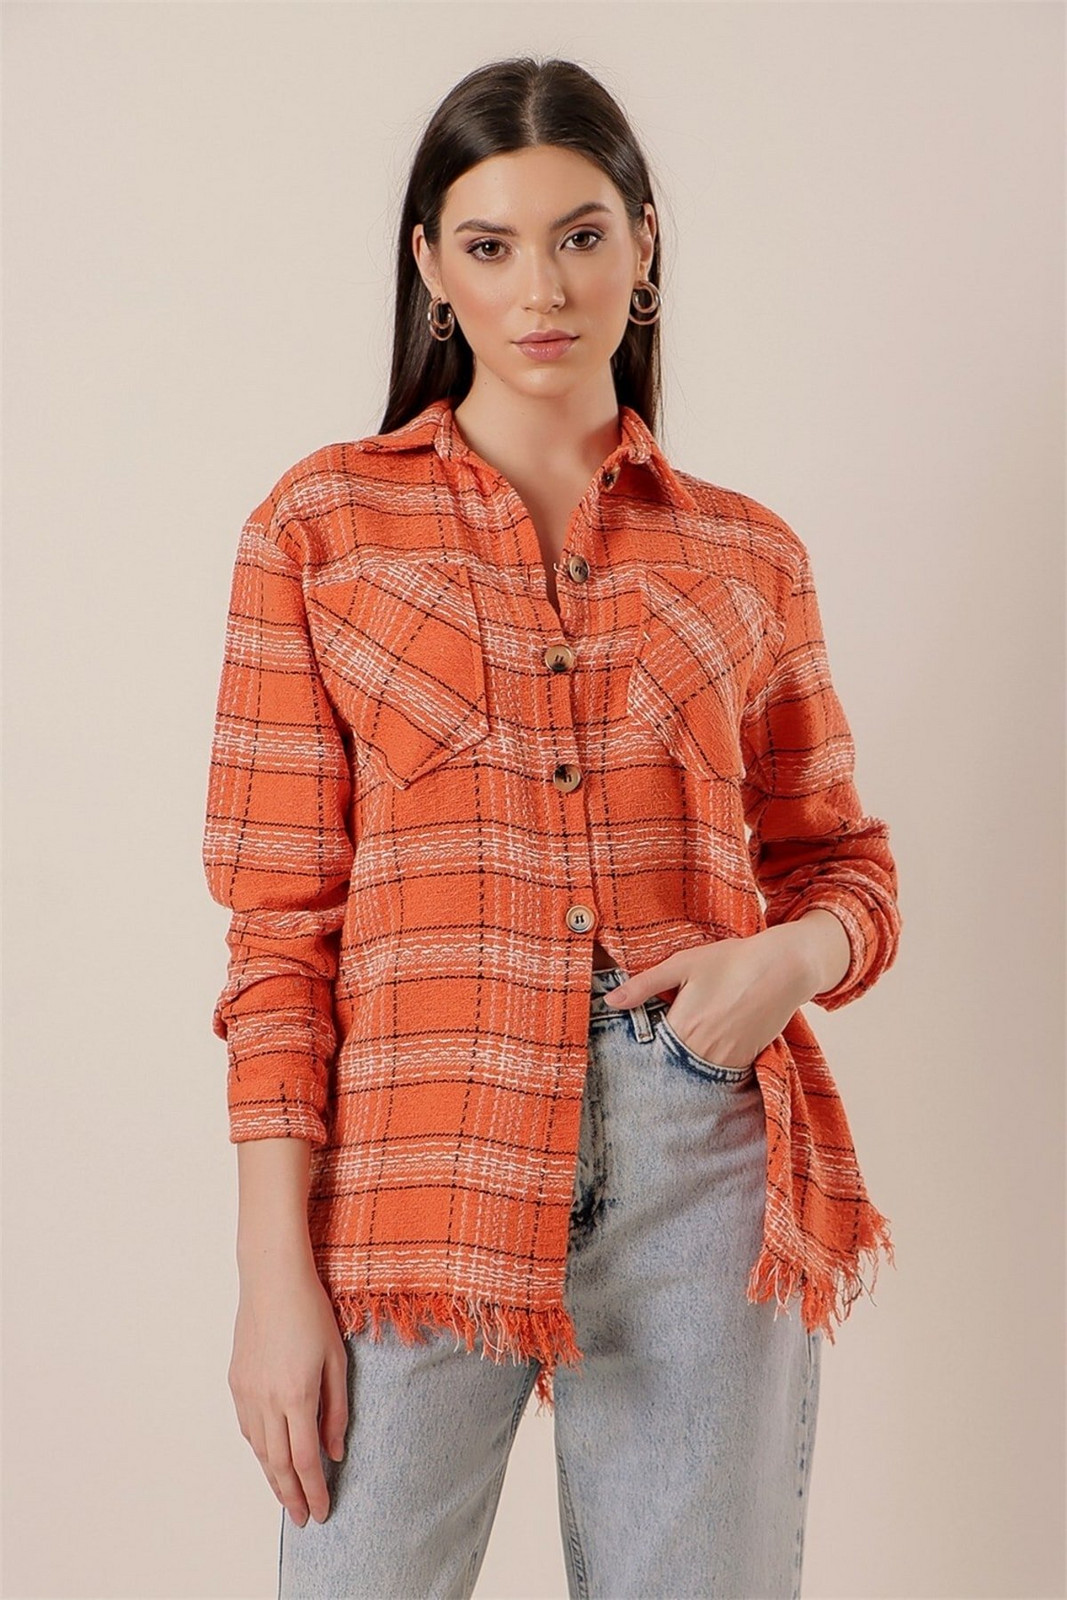 By Saygı Large Checkered Shanel Shirt Orange with Tassels Skirt